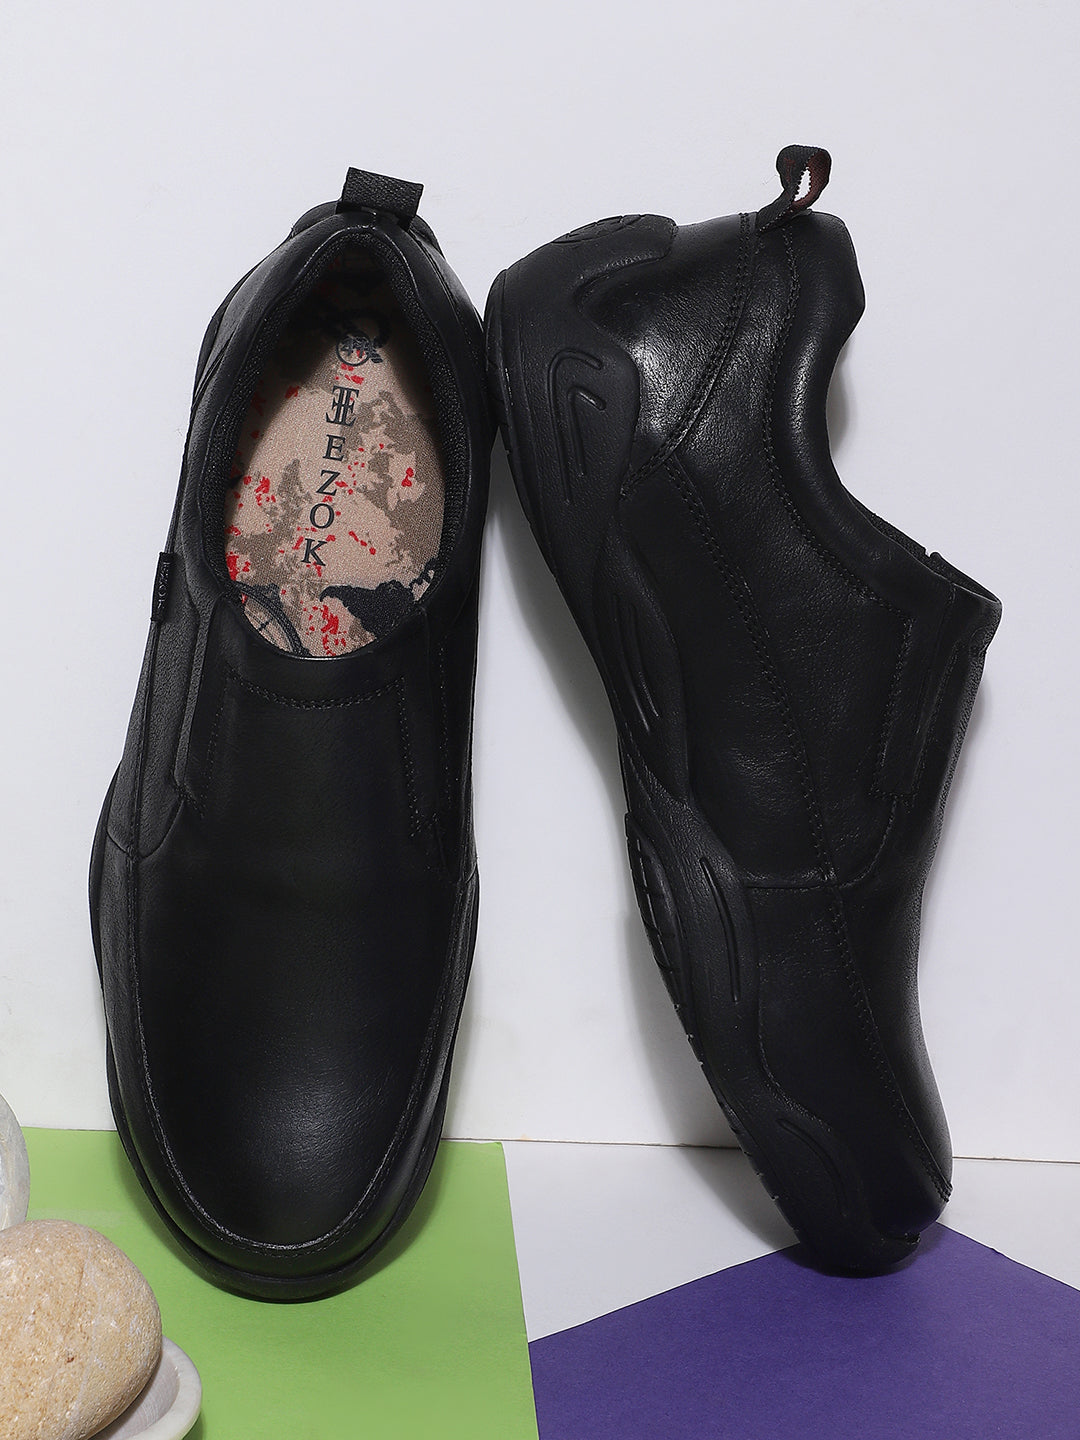 Ezok Men Seger 2100 Black Leather Sneakers